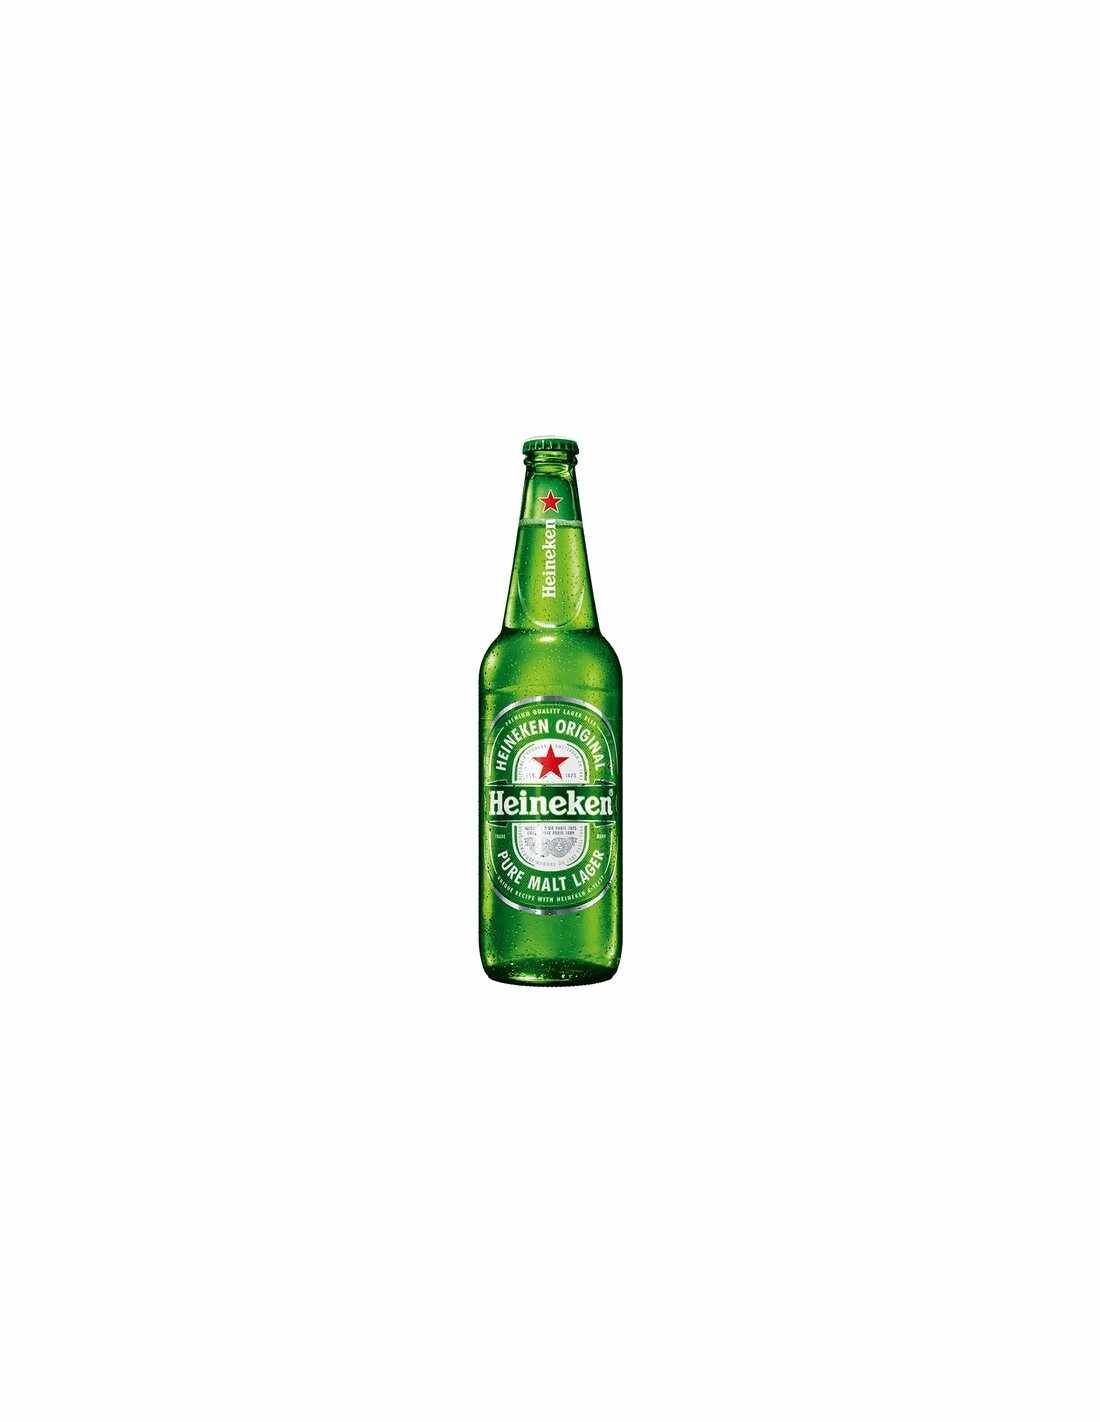 Bere blonda, filtrata Heineken Premium, 5% alc., 0.66L